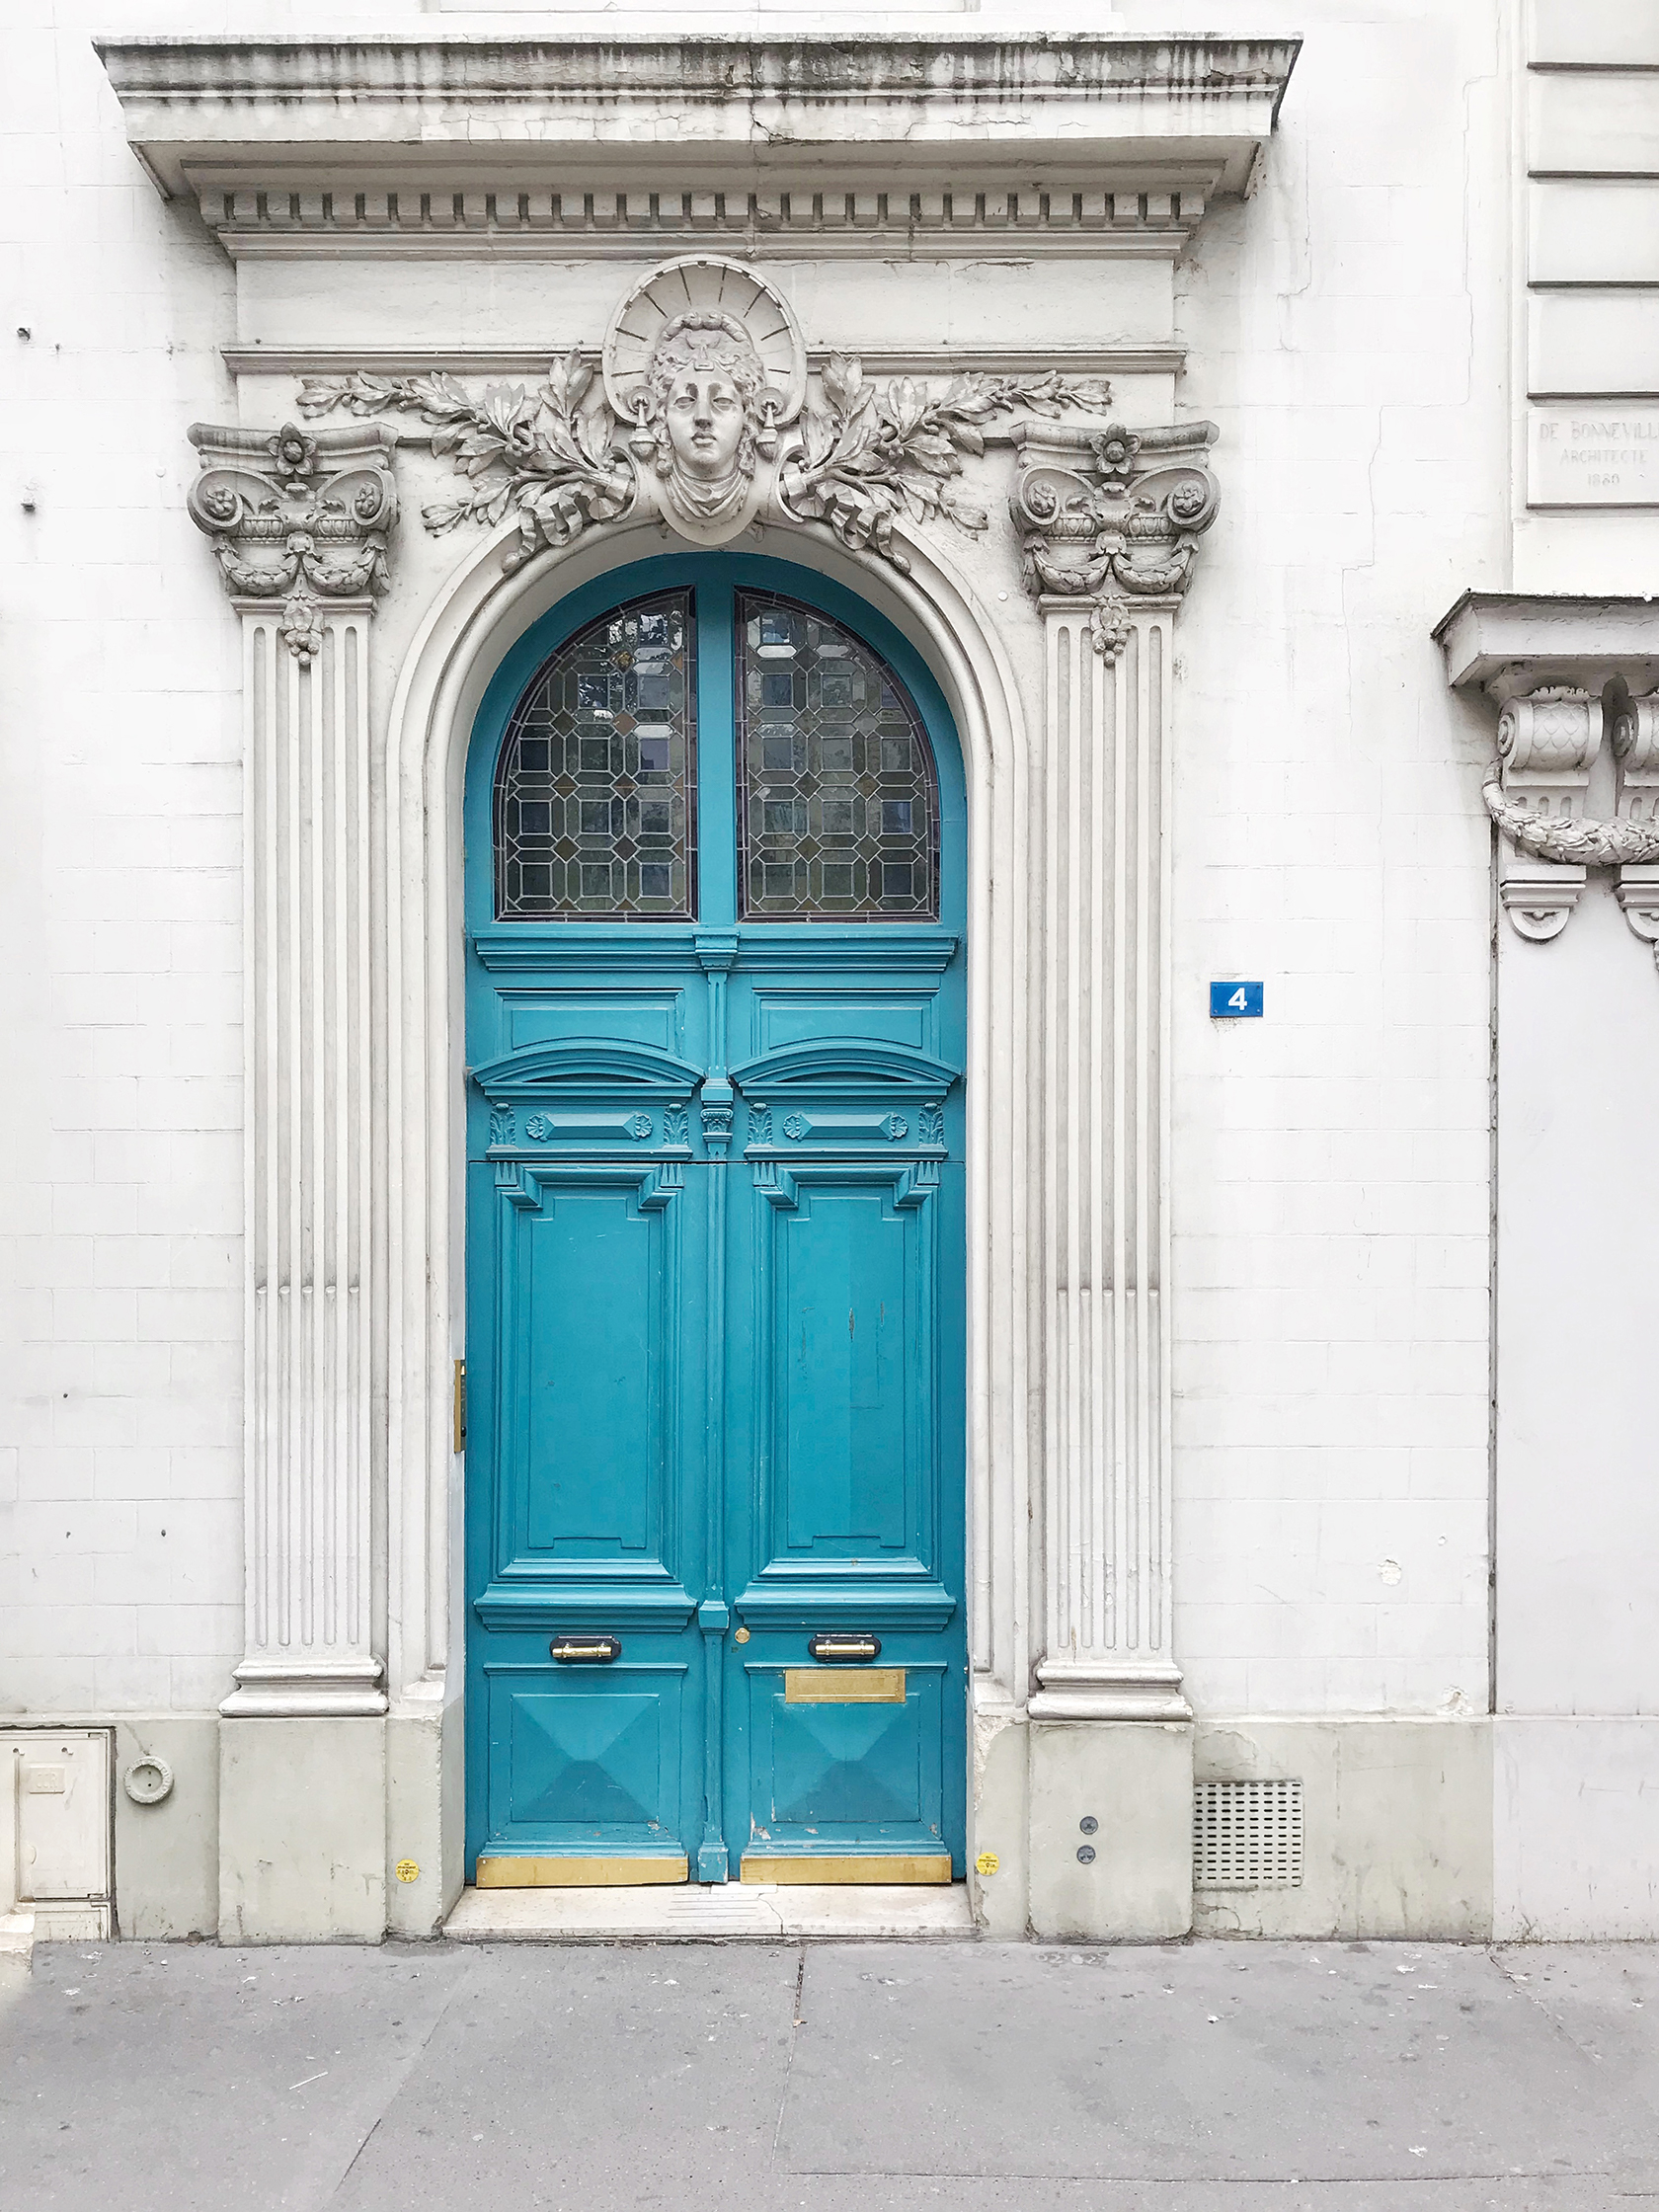 Buy an Apartment in Paris